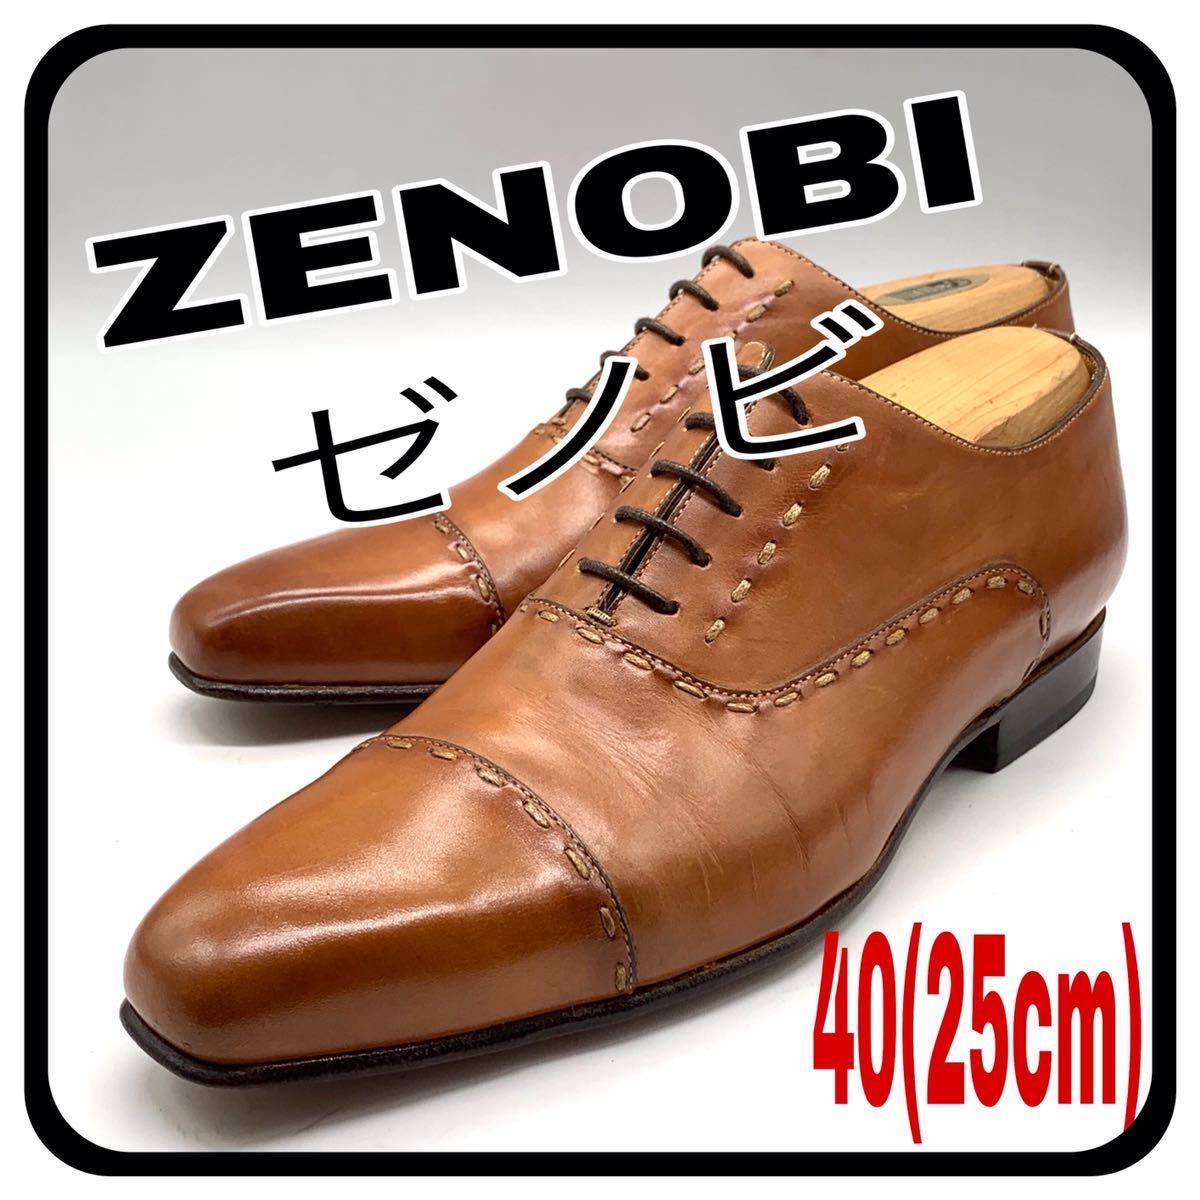 ZENOBI ゼノビ ドレスシューズ キャップトゥ ストレートチップ ビジネスシューズ キャメル ブラウン 40 25cm 革靴 イタリア製 メンズ  メンズファッション シューズ www.potentehouston.com